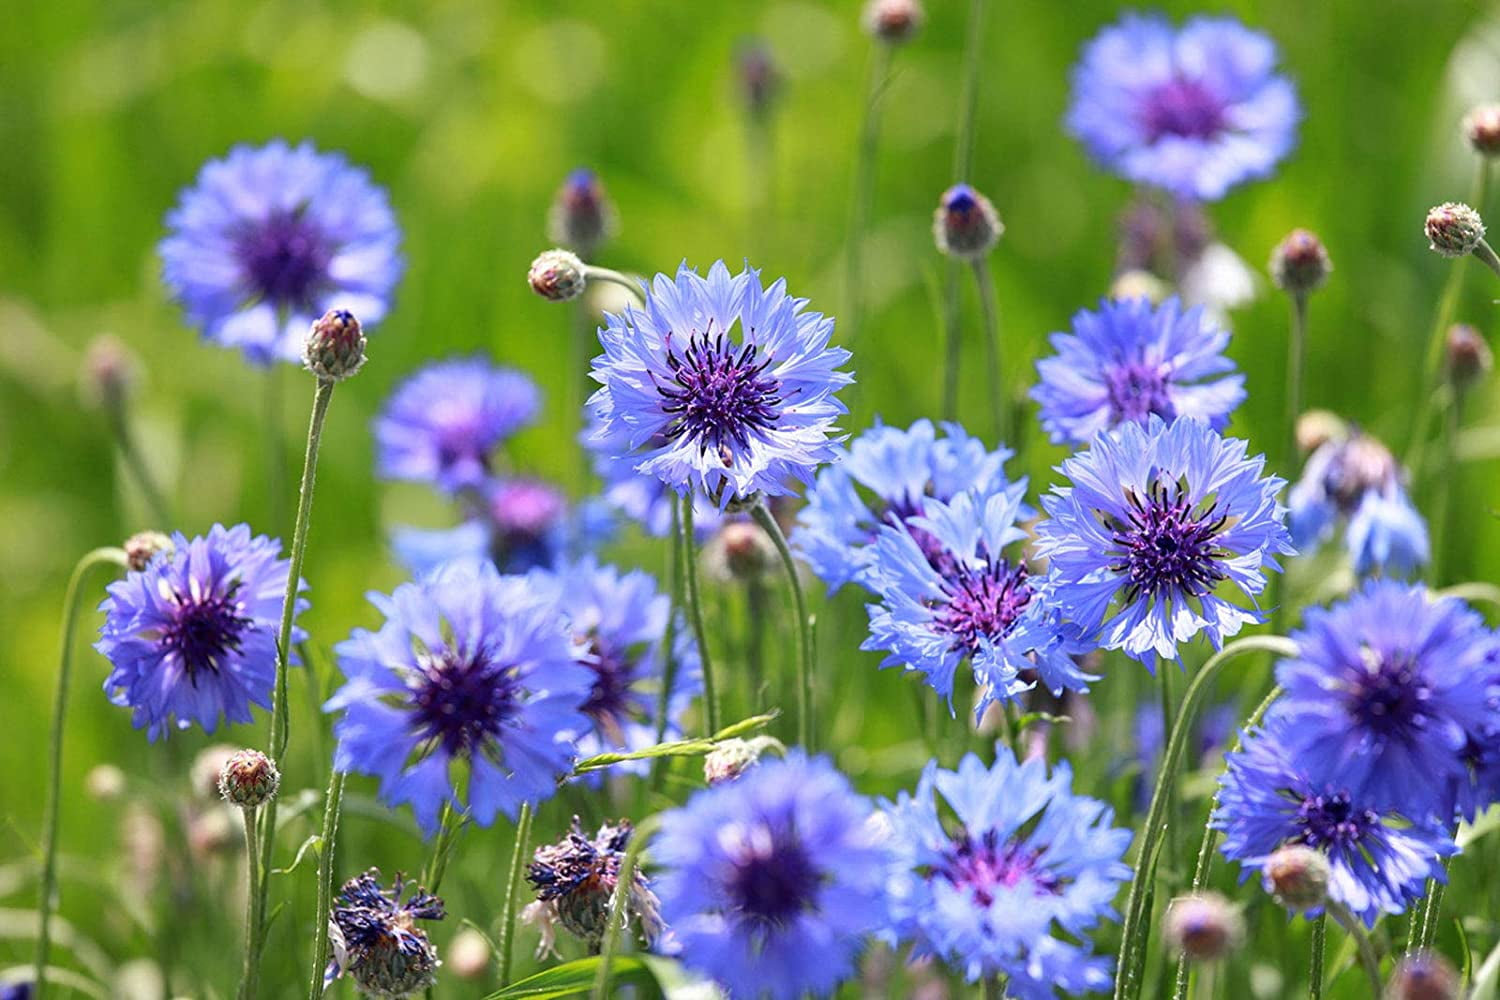 Bachelor's Buttons - Blue, Pink, White, Burgundy [centaurea] : Michigan  Flower Farm, Locally Grown FlowersNaturally!